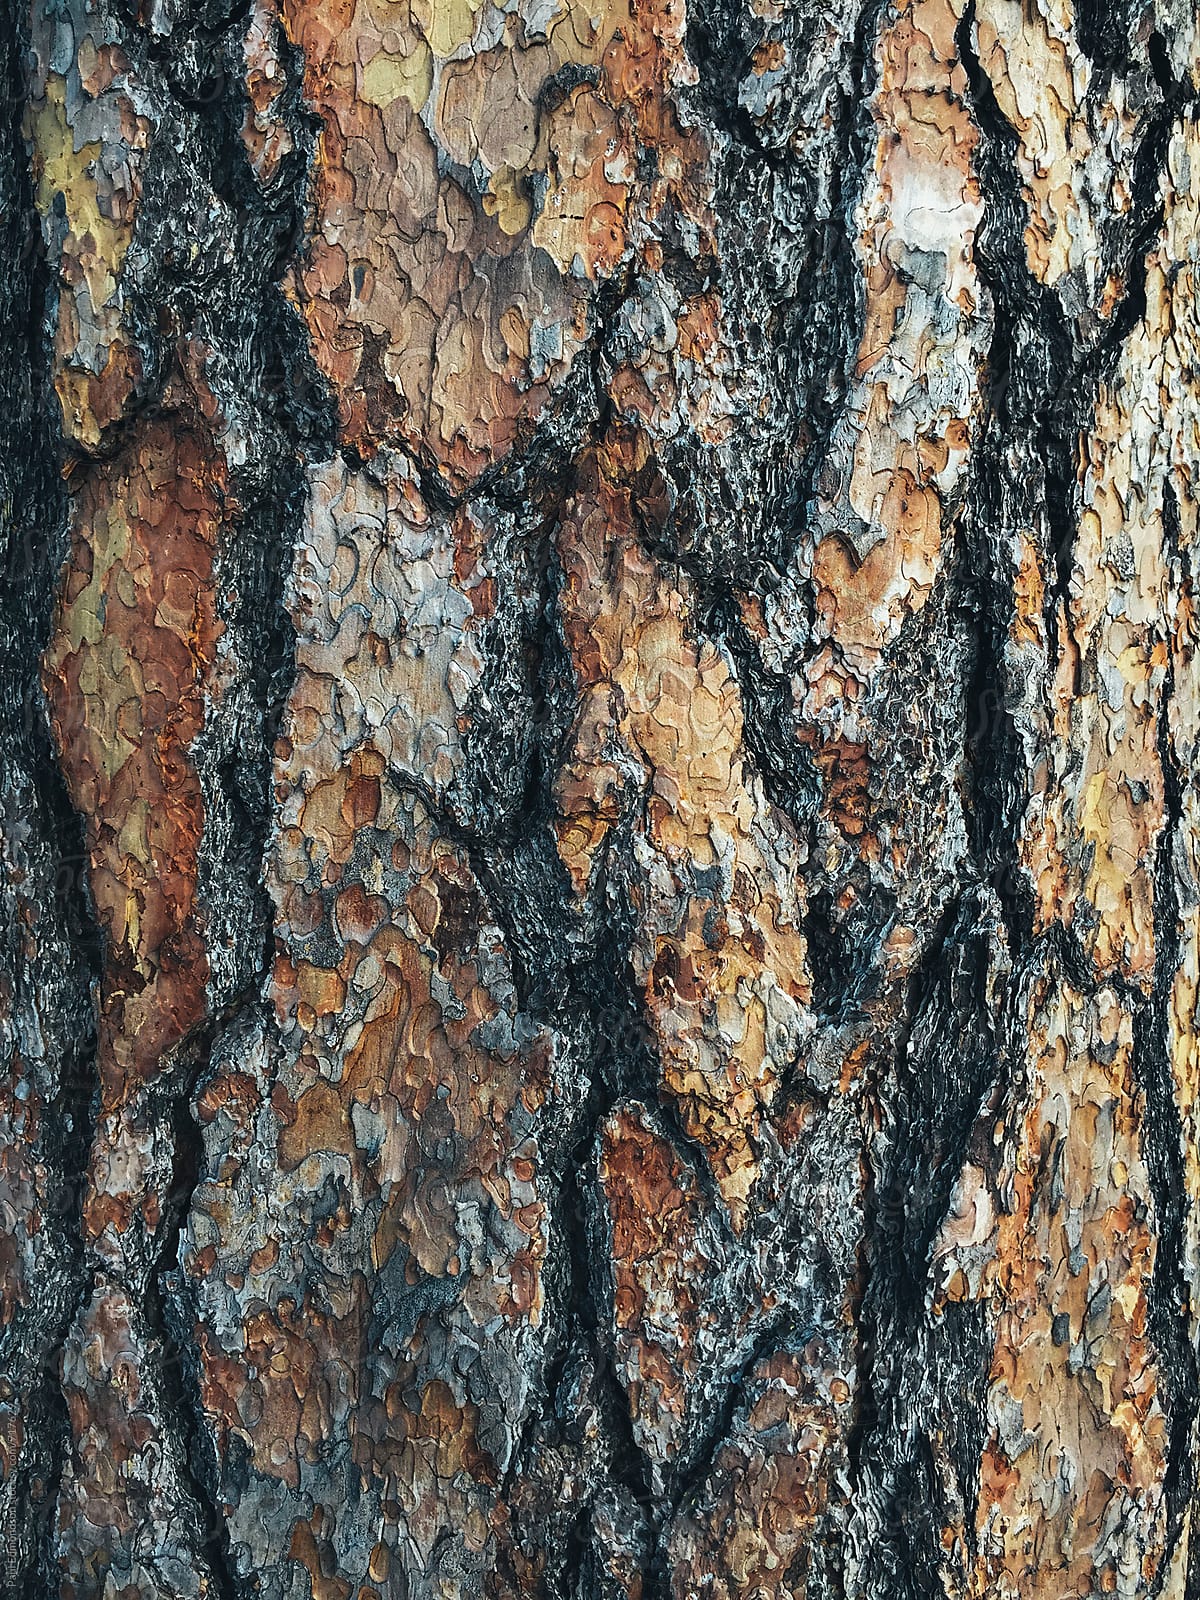 Close up of bark from Ponderosa pine tree